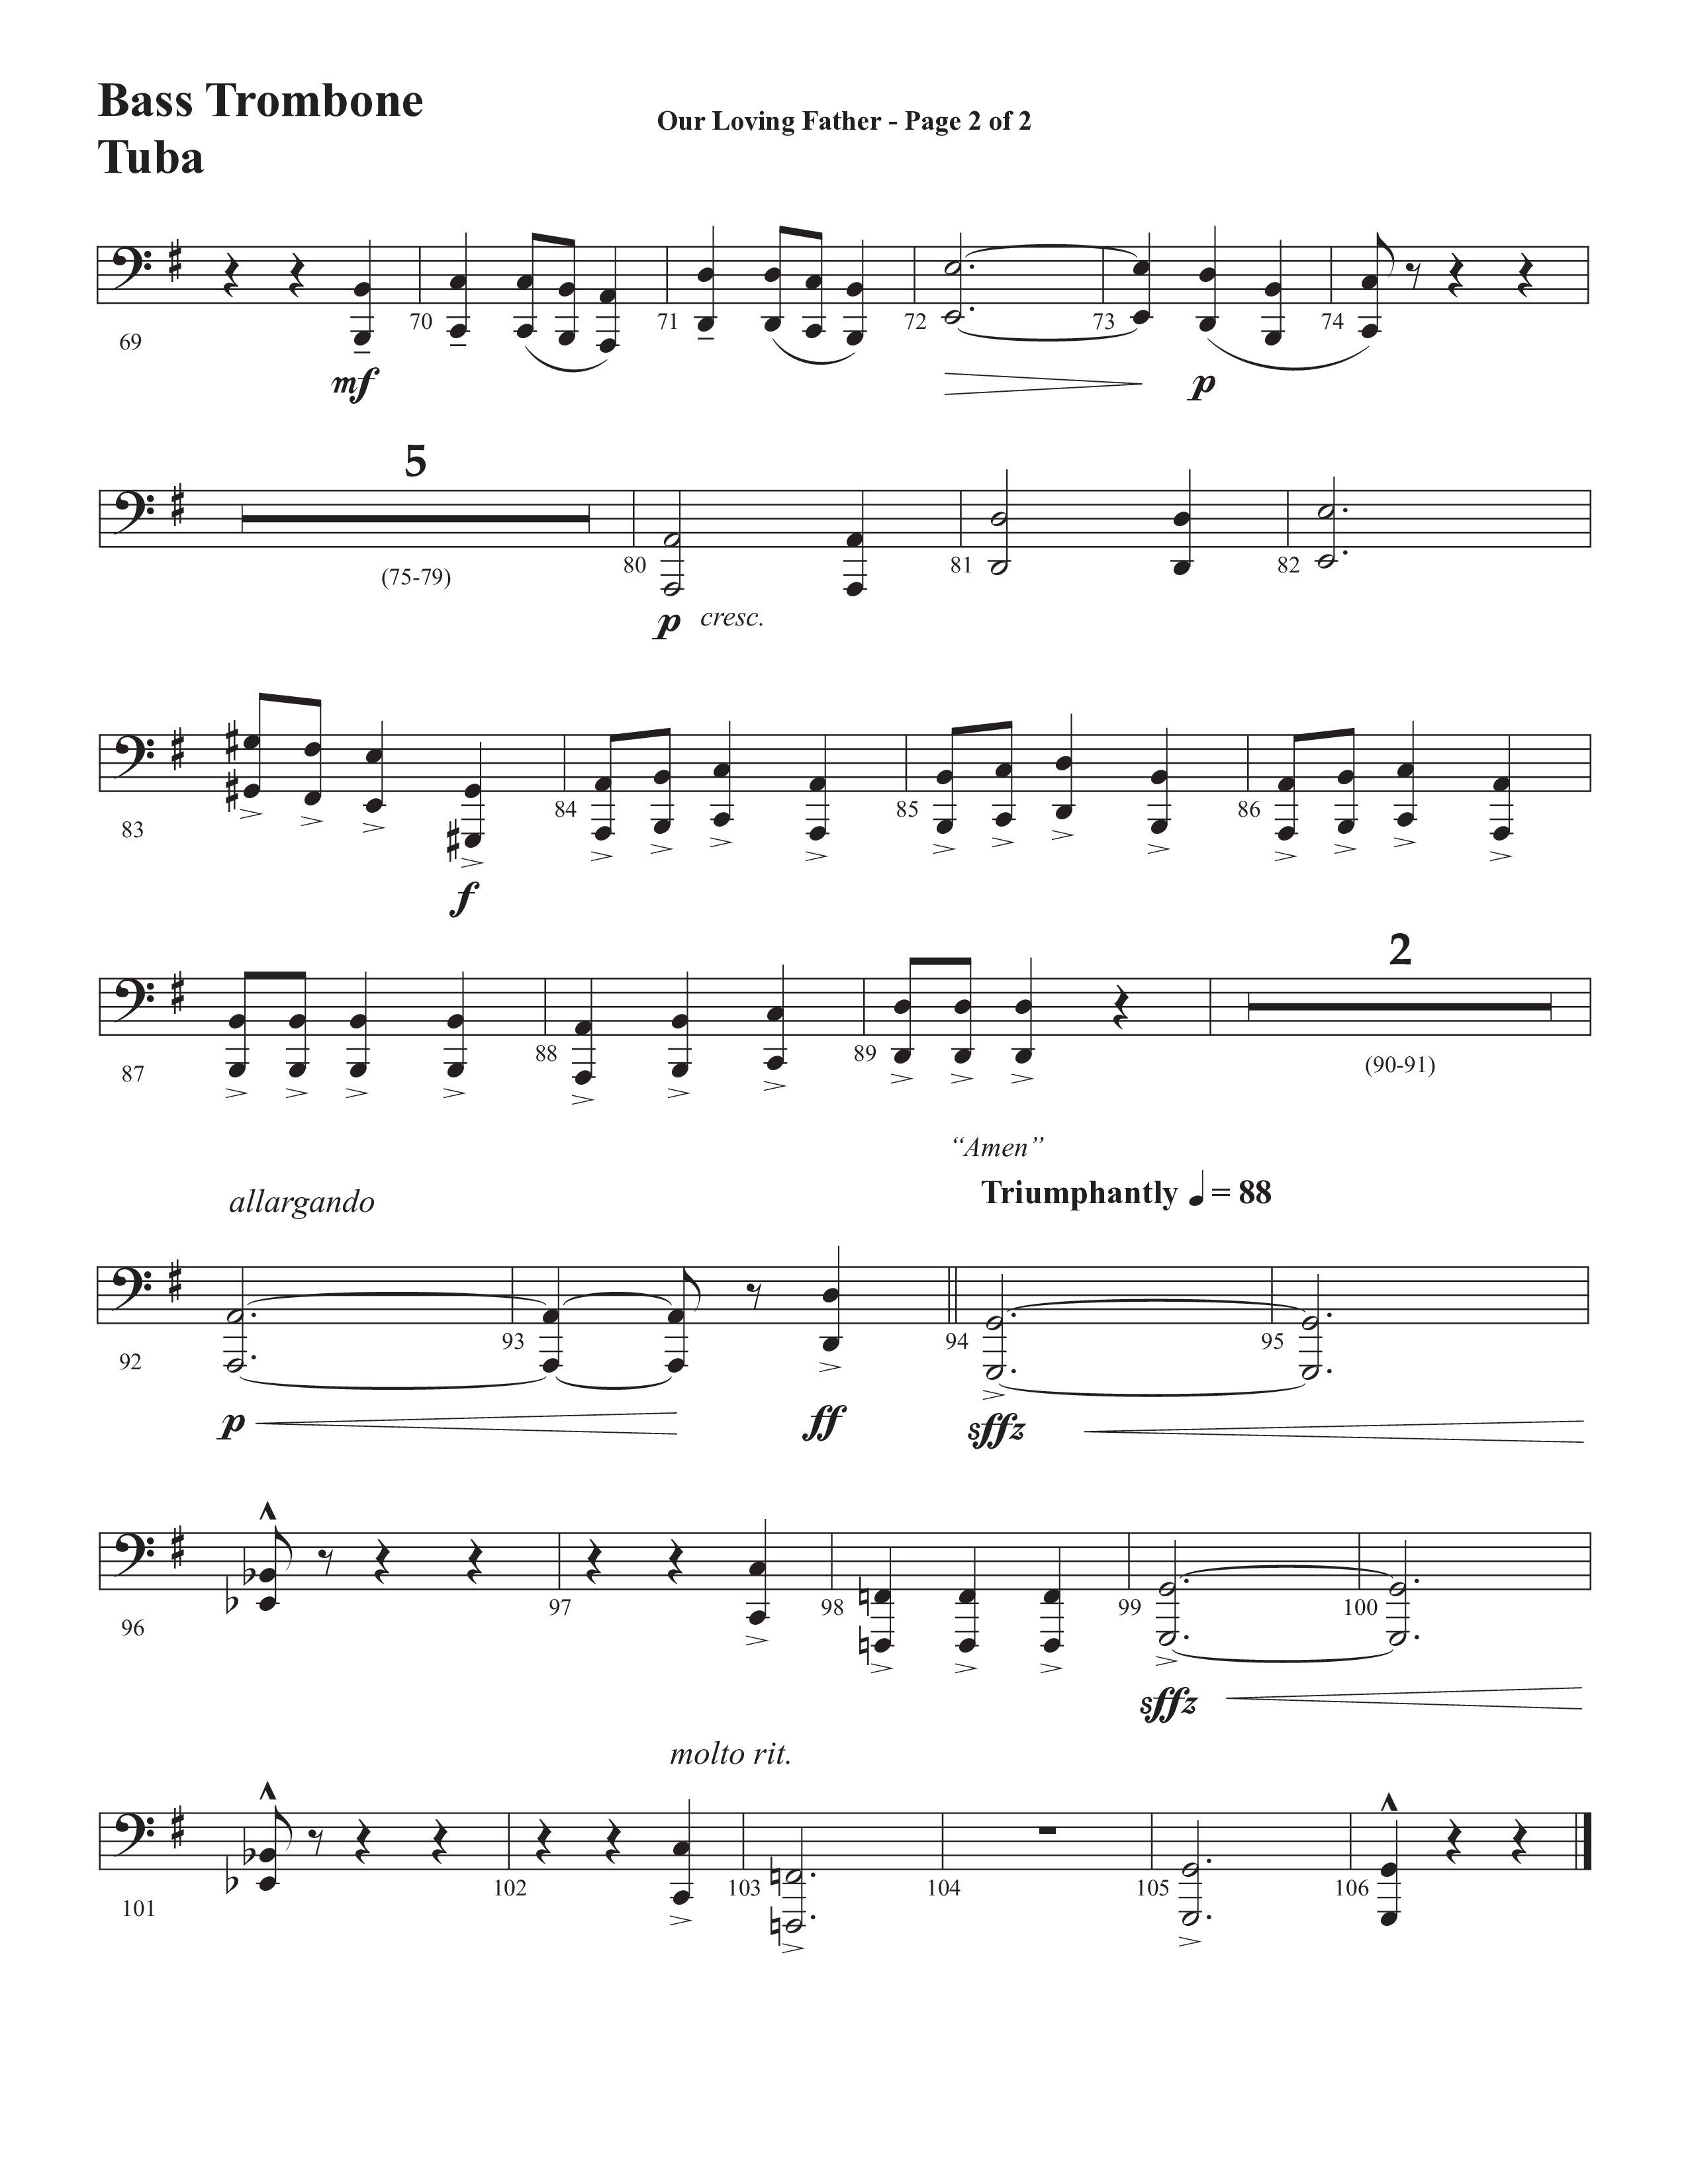 Our Loving Father (Choral Anthem SATB) Orchestration (Semsen Music / Arr. Phillip Keveren)